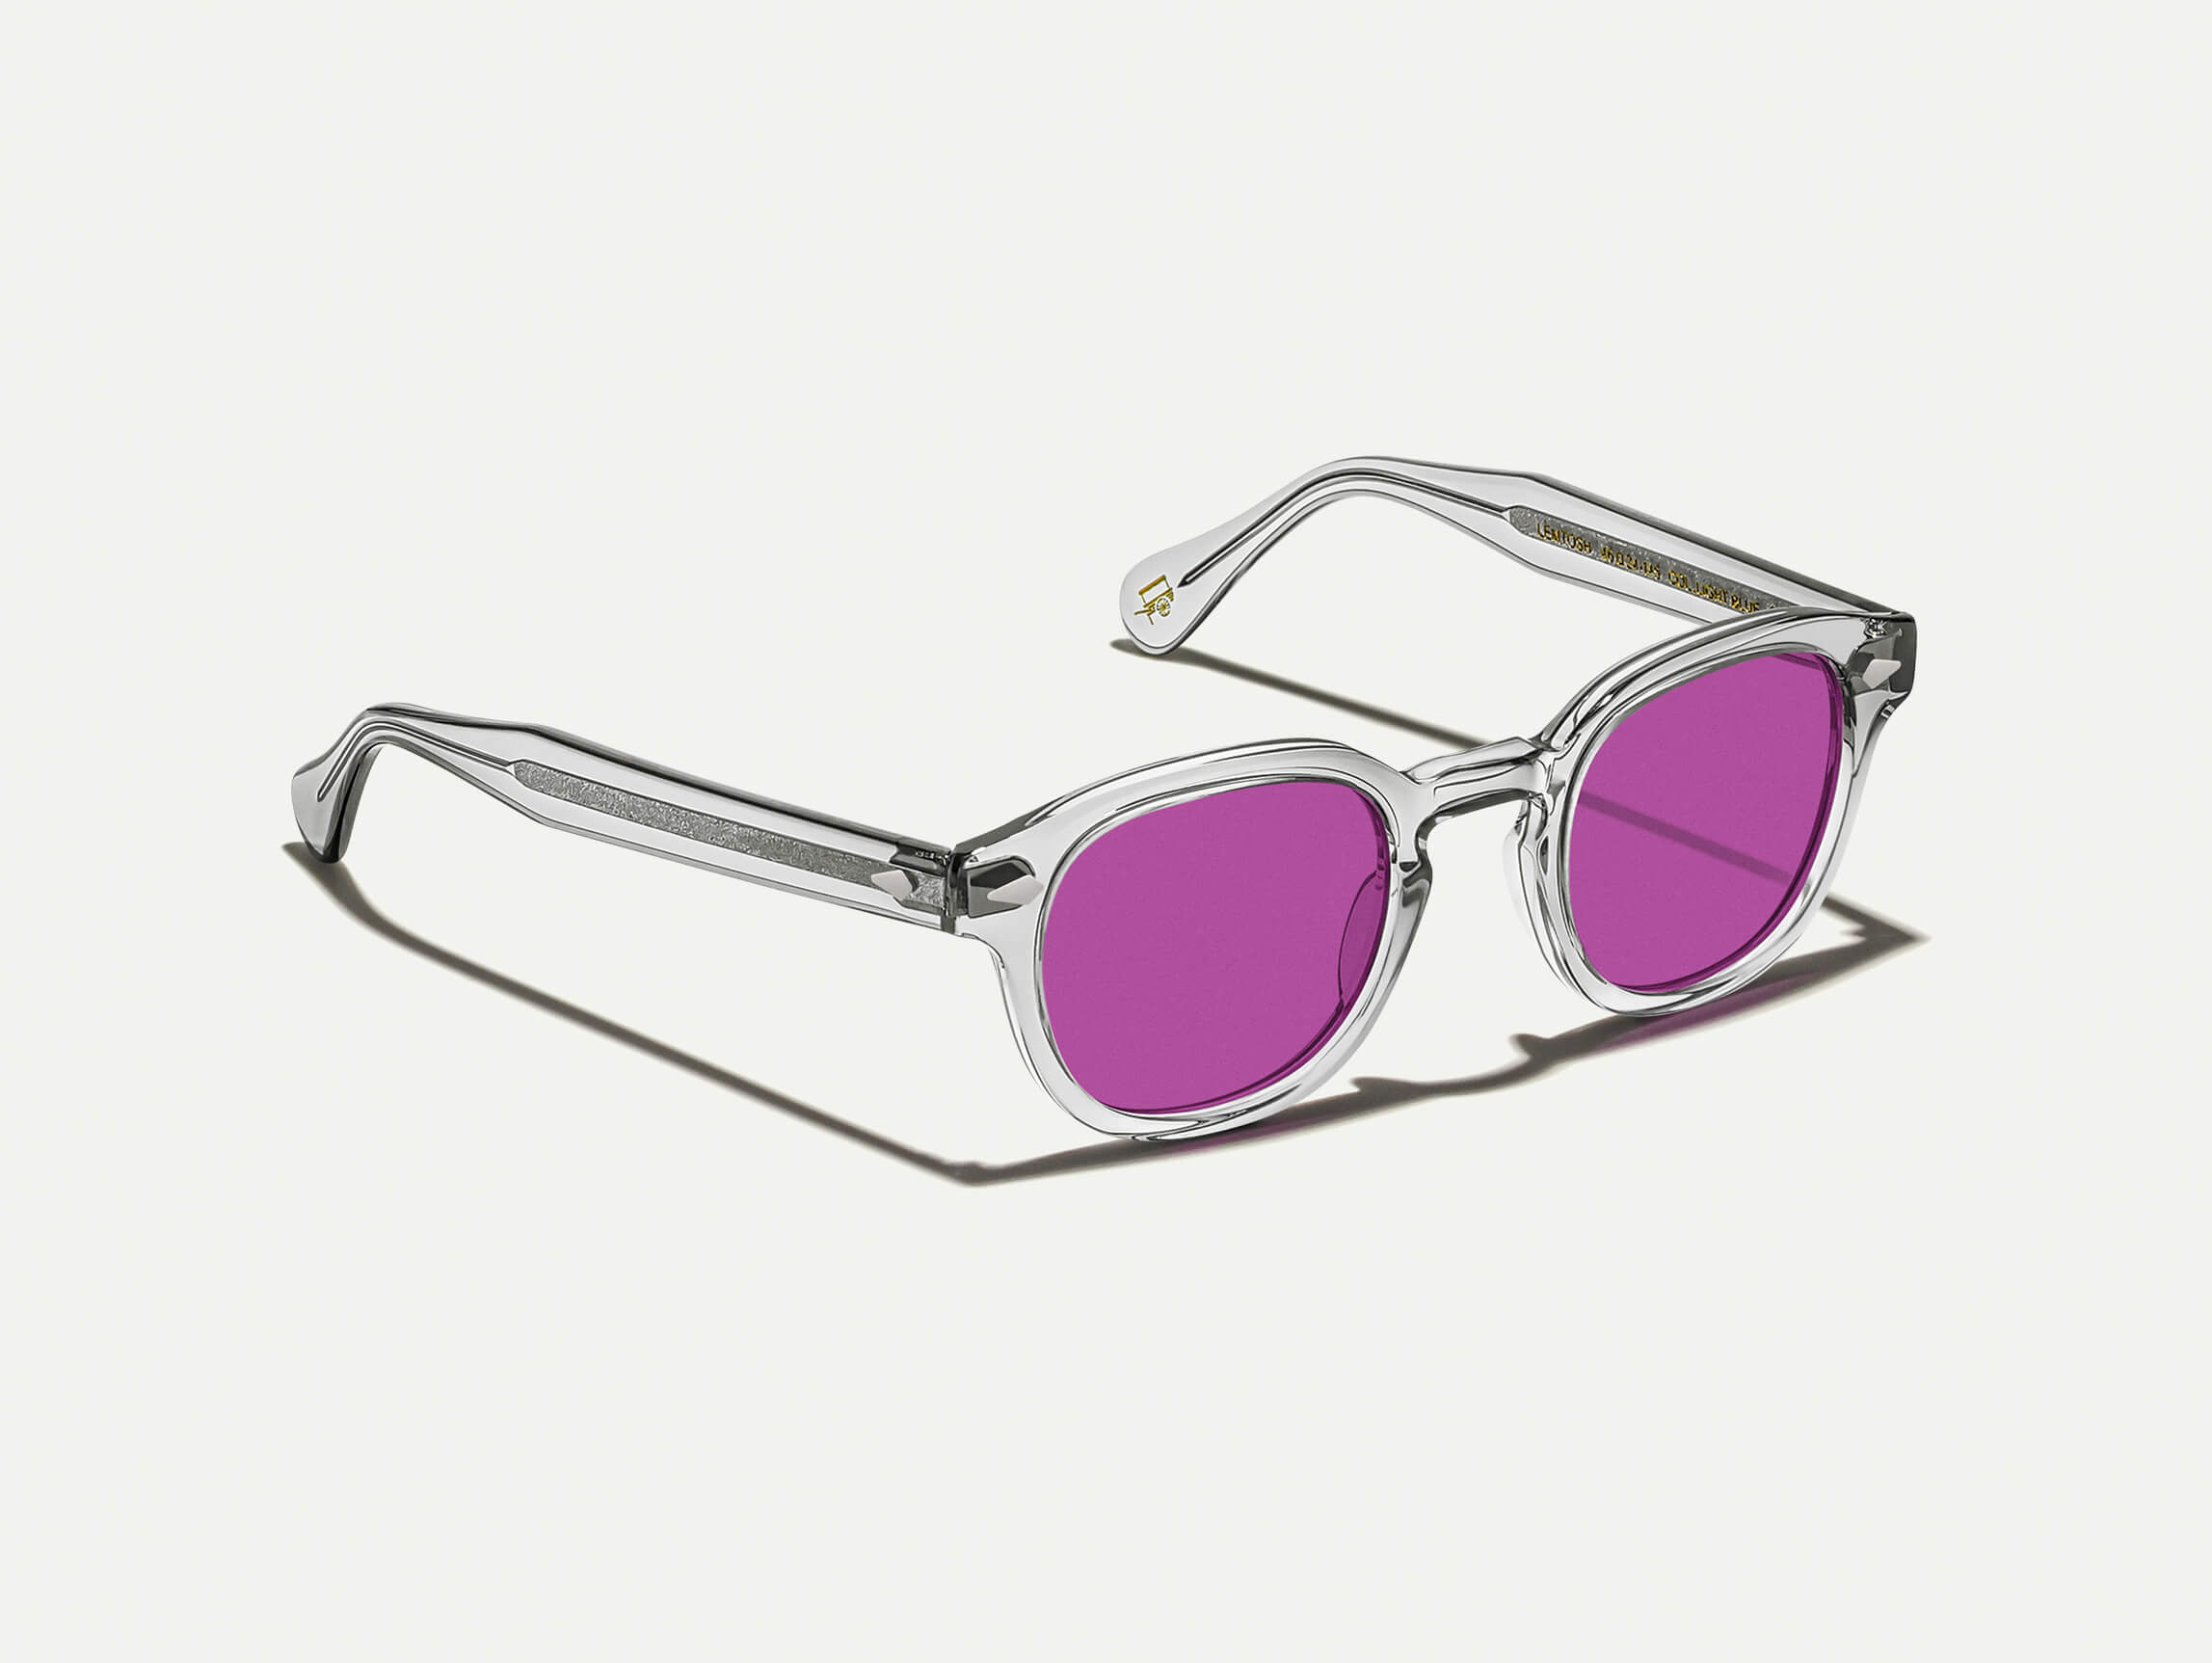 The LEMTOSH Light Grey with Purple Nurple Tinted Lenses